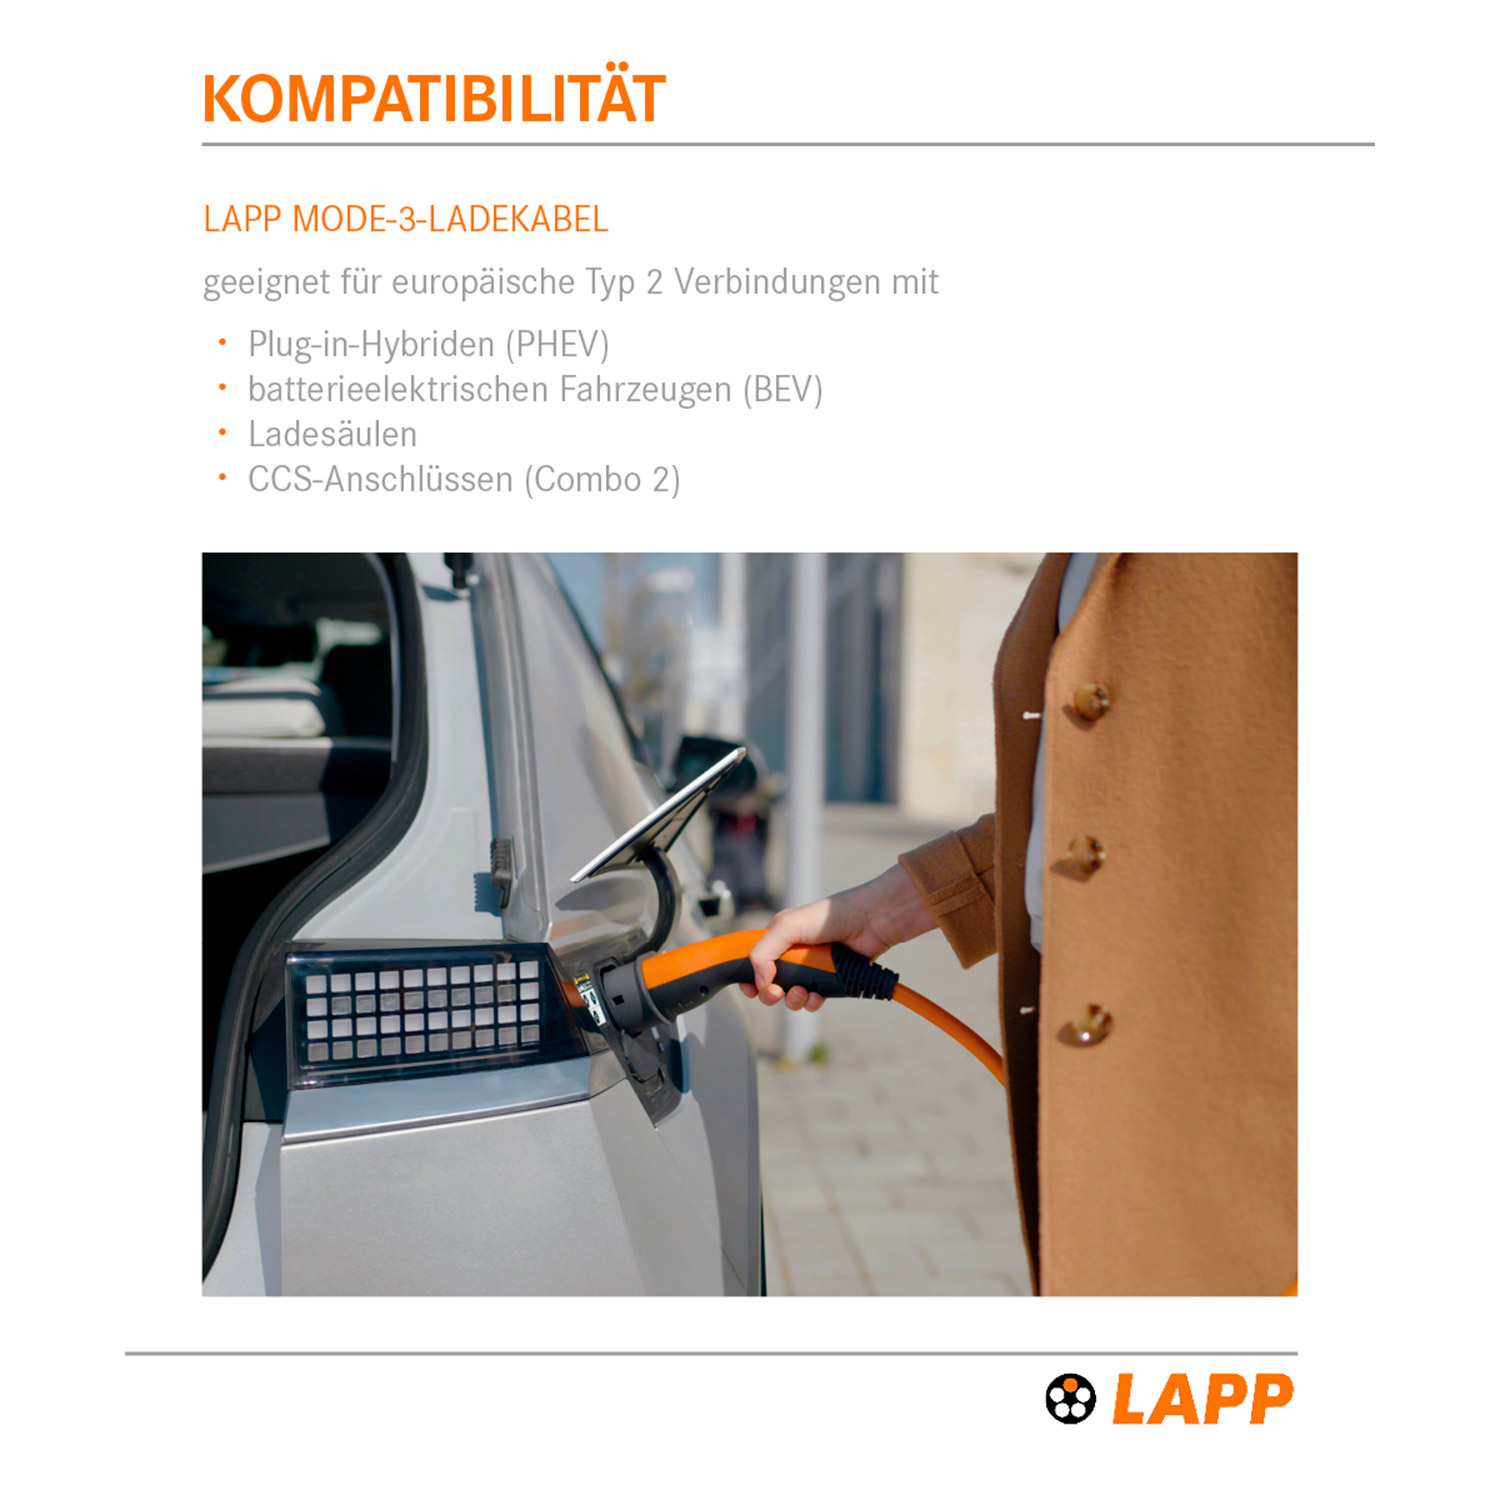 LAPP MOBILITY 11 kW, Ladekabel Helix für 5 m Elektrofahrzeuge, 61796 Kabellänge